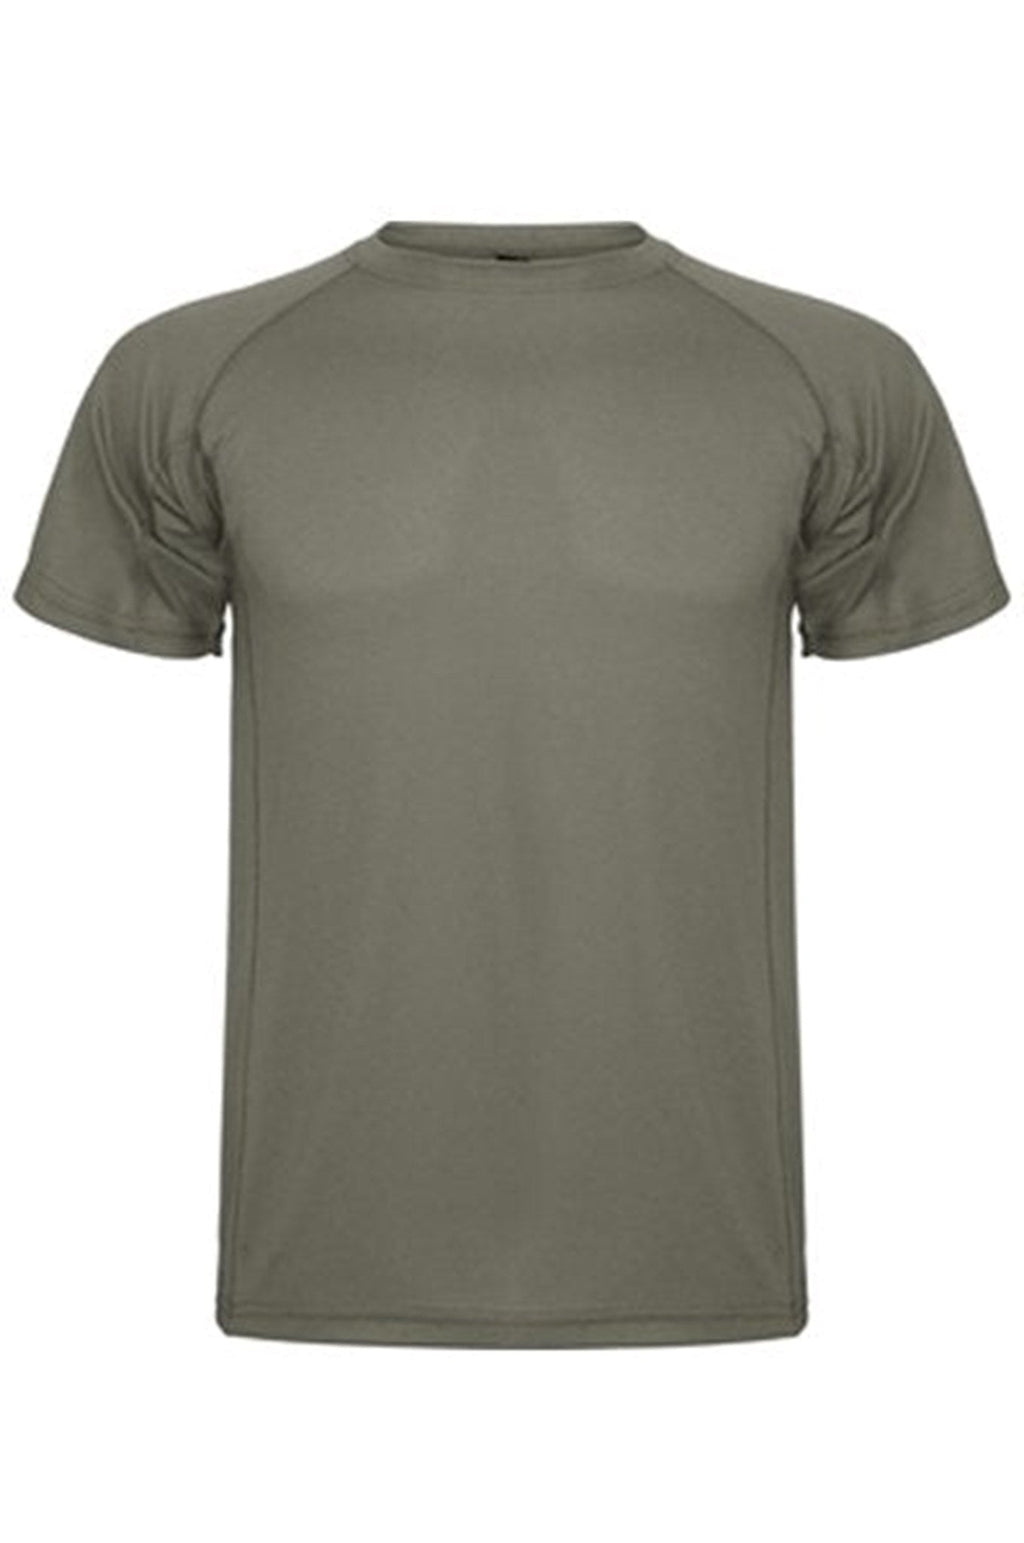 Training T-shirt - Army Green